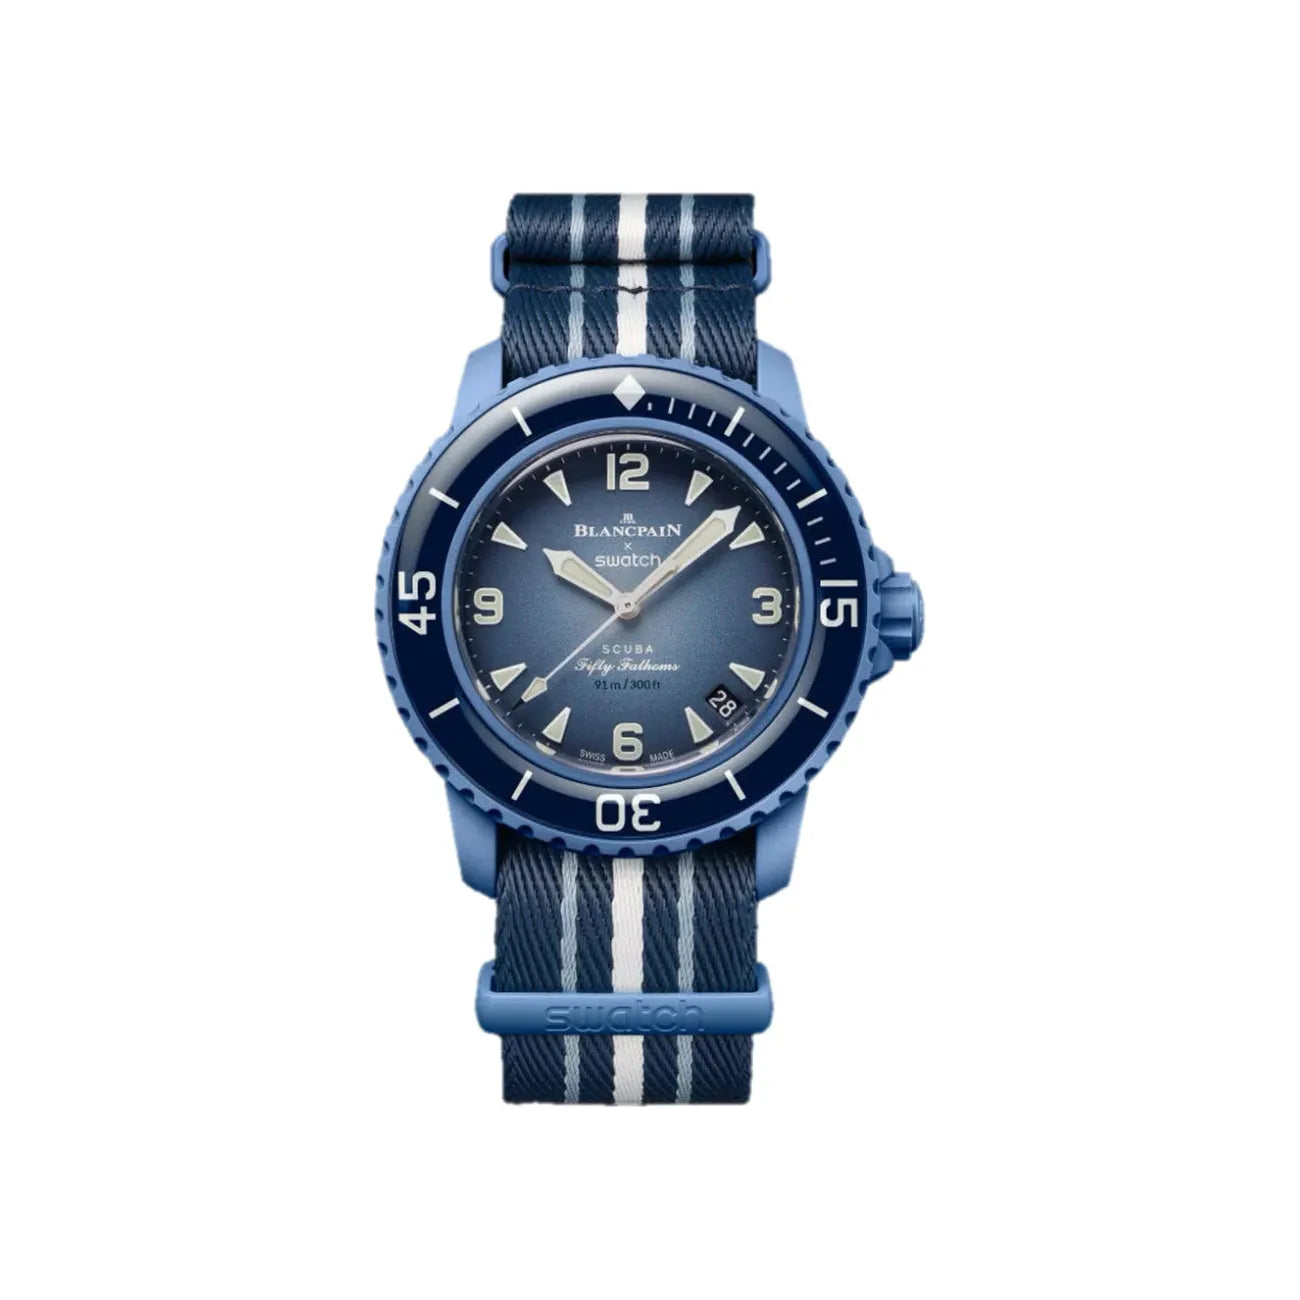 Swatch X Blancpain Bioceramic Scuba Fifty Fathoms Watch - Atlantic Ocean Dark Blue